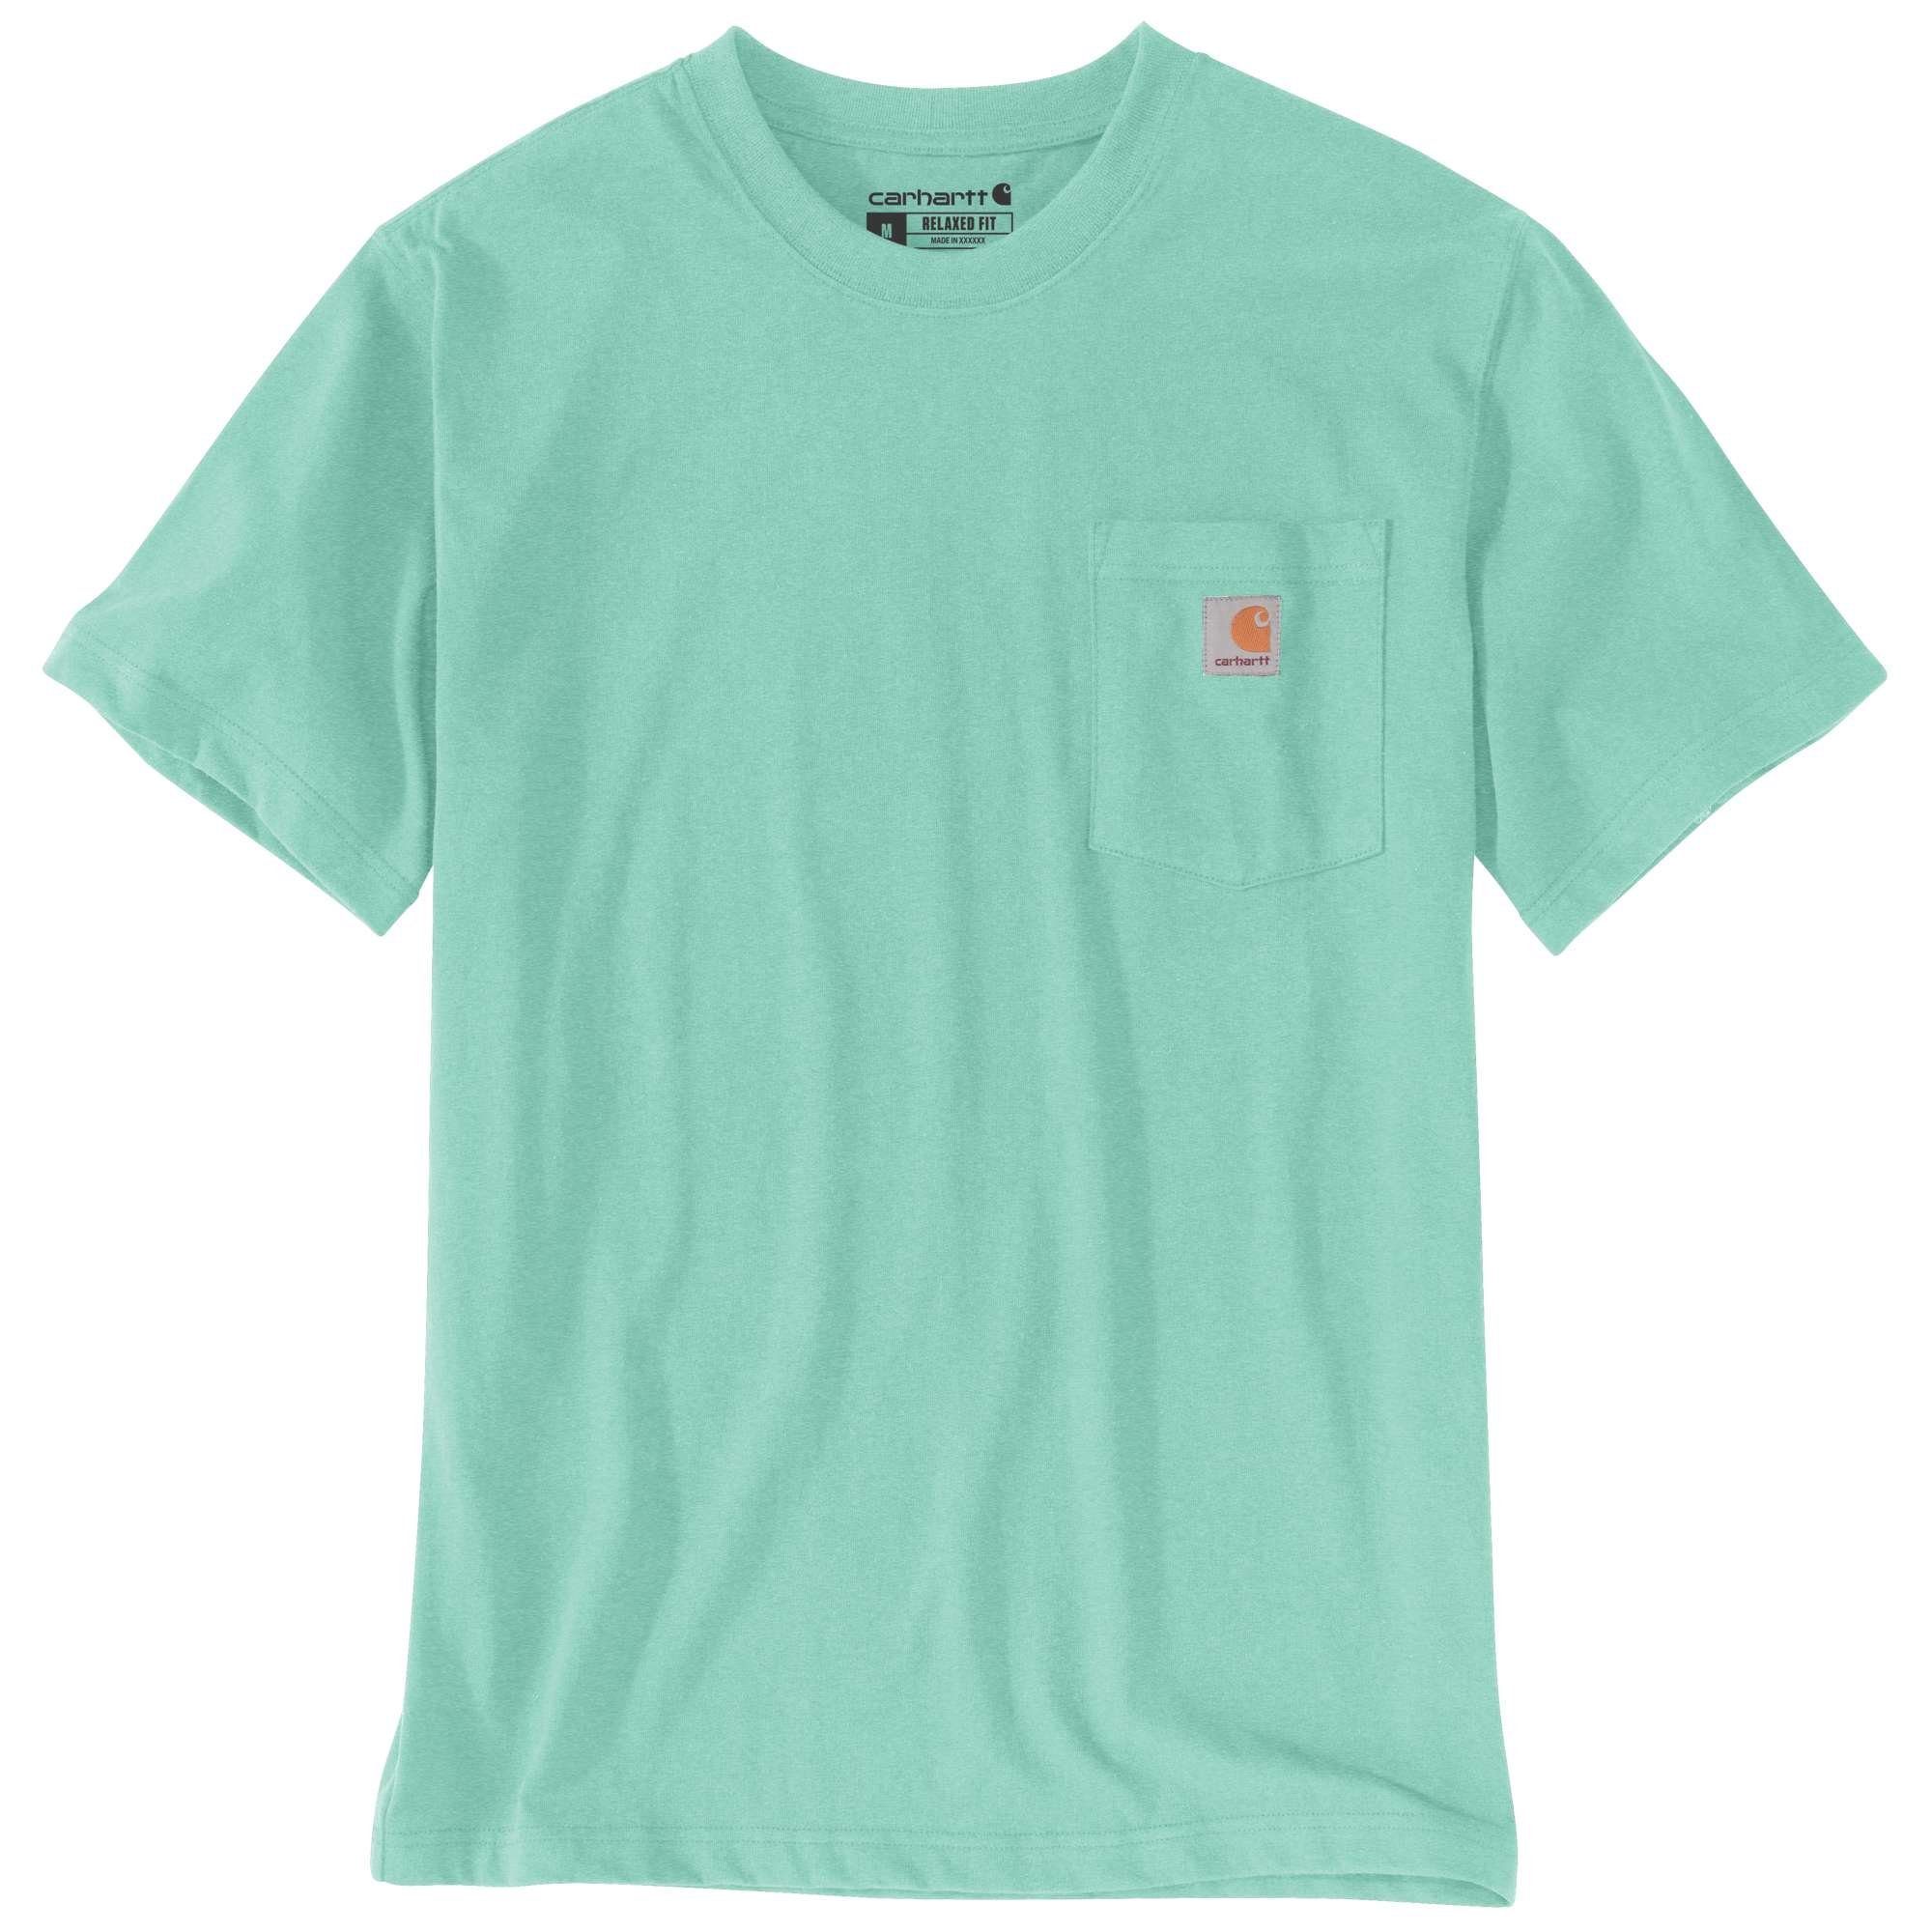 SeaGreen T-Shirt Pocket Relaxed K87 Carhartt Fit